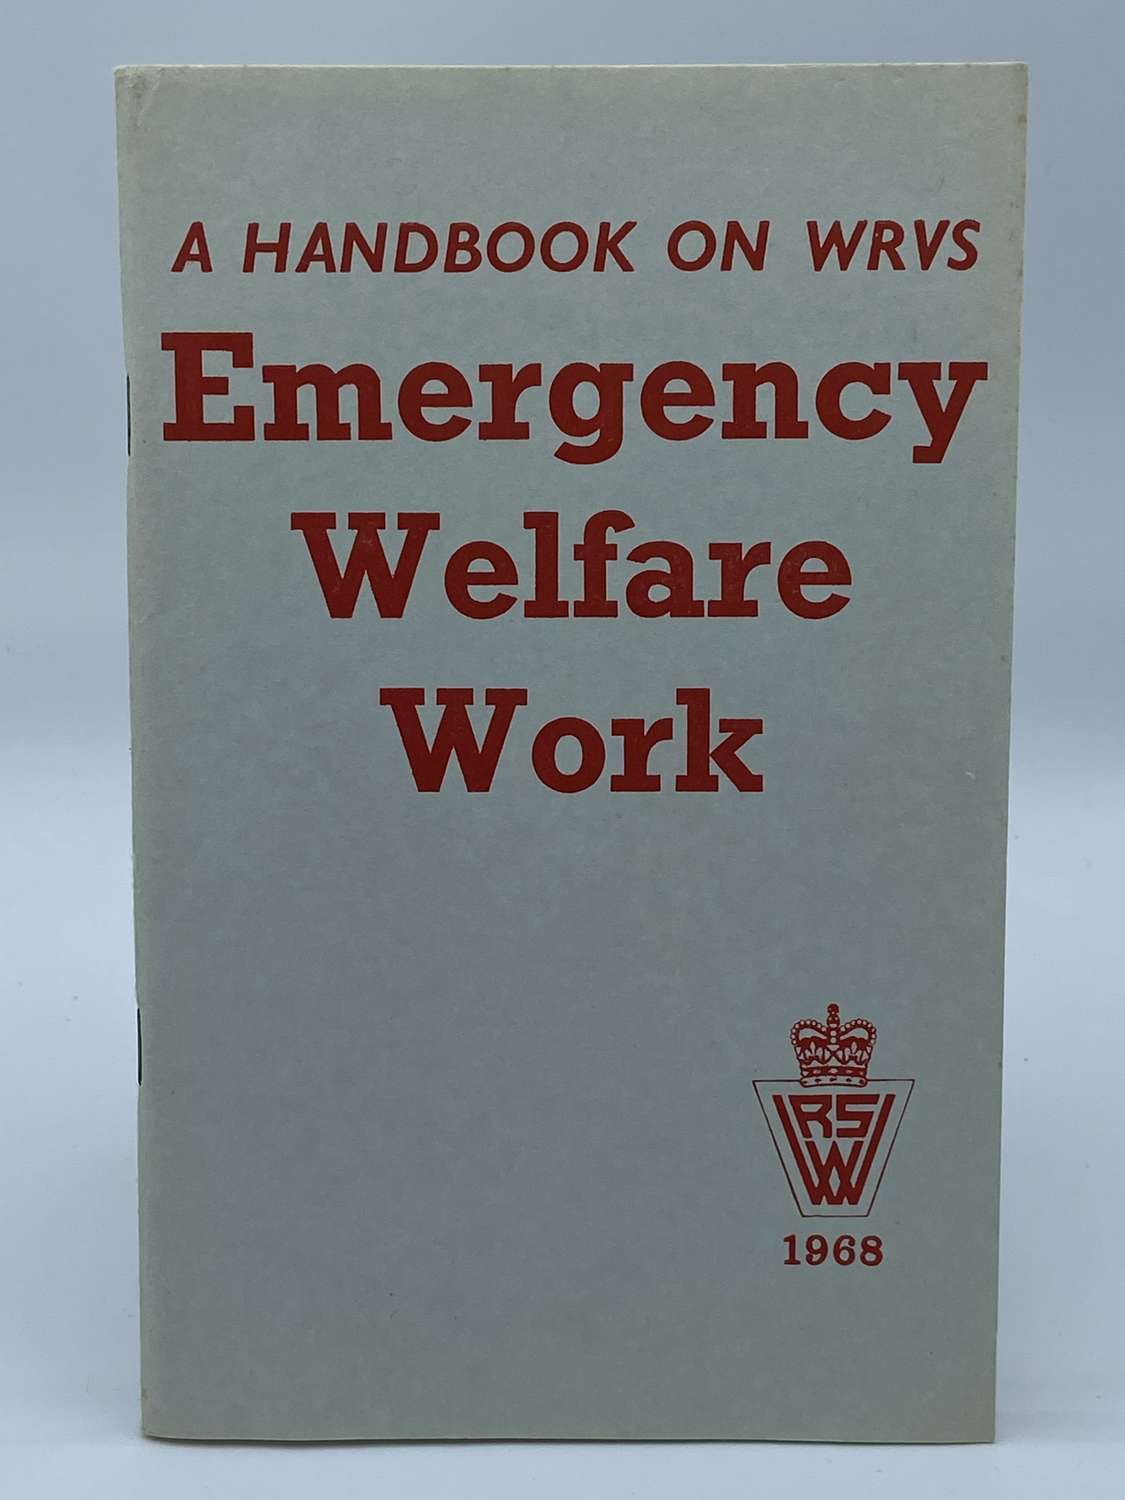 1968 Cold War Hand Book On WRVS Emergency Welfare Work Book